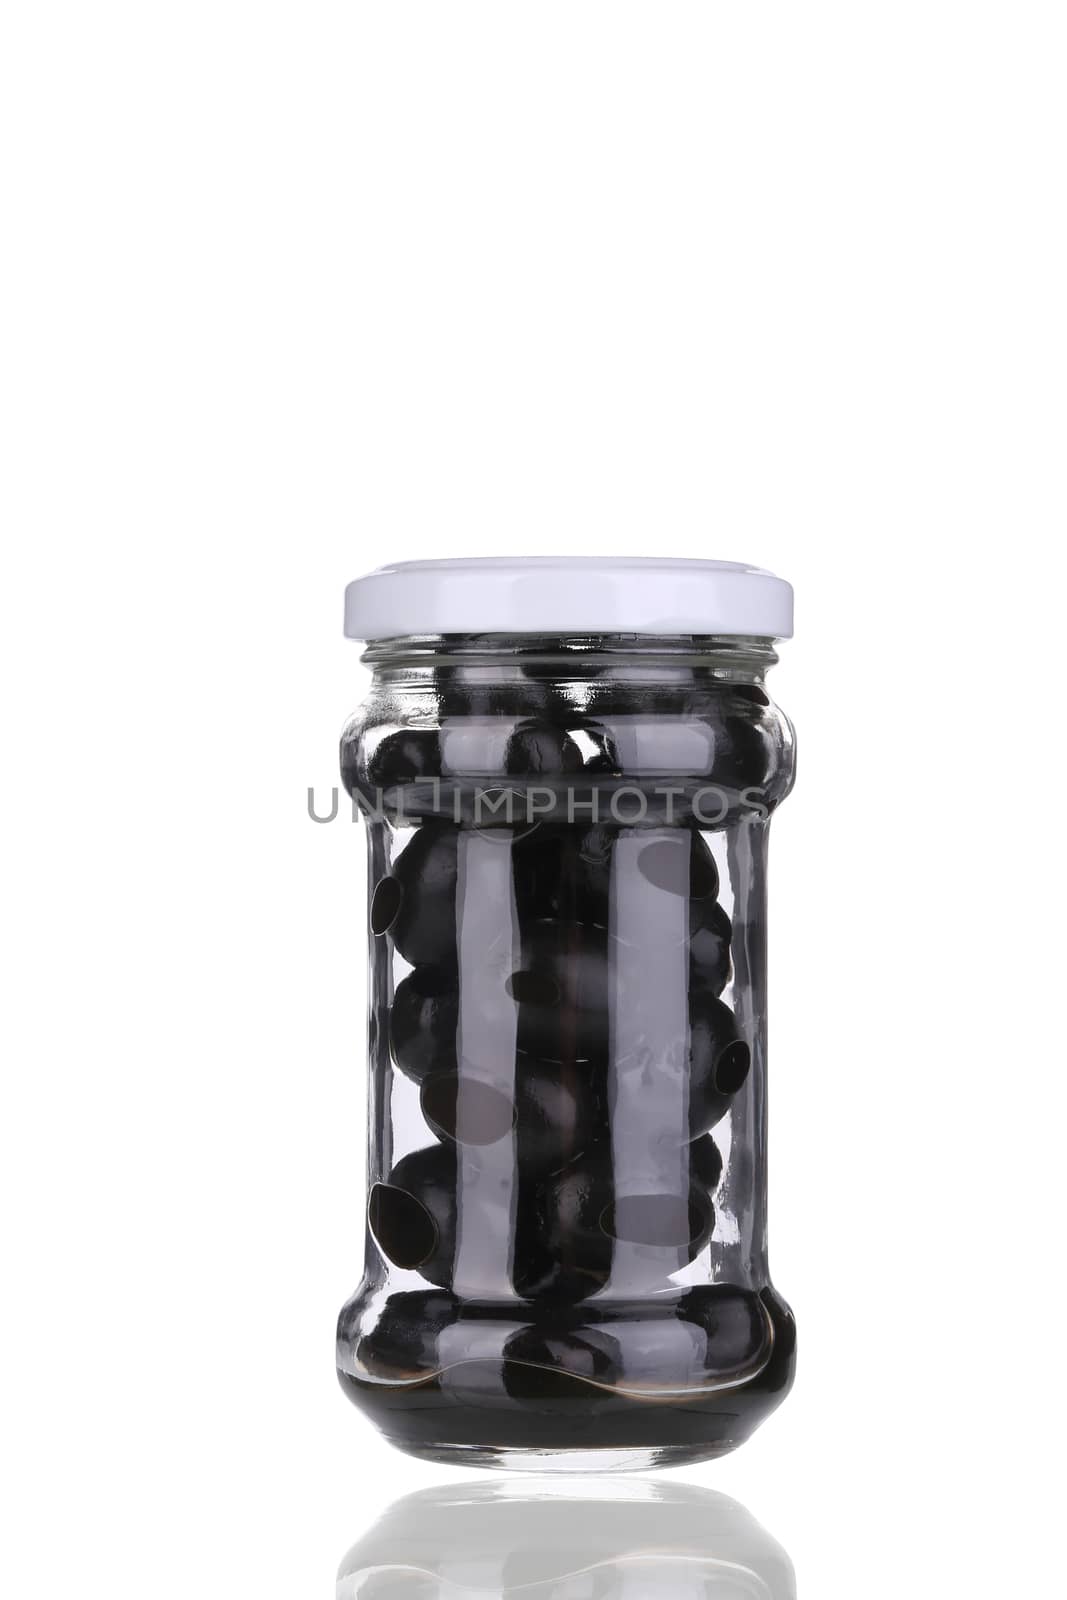 Black olives in a jar. by indigolotos